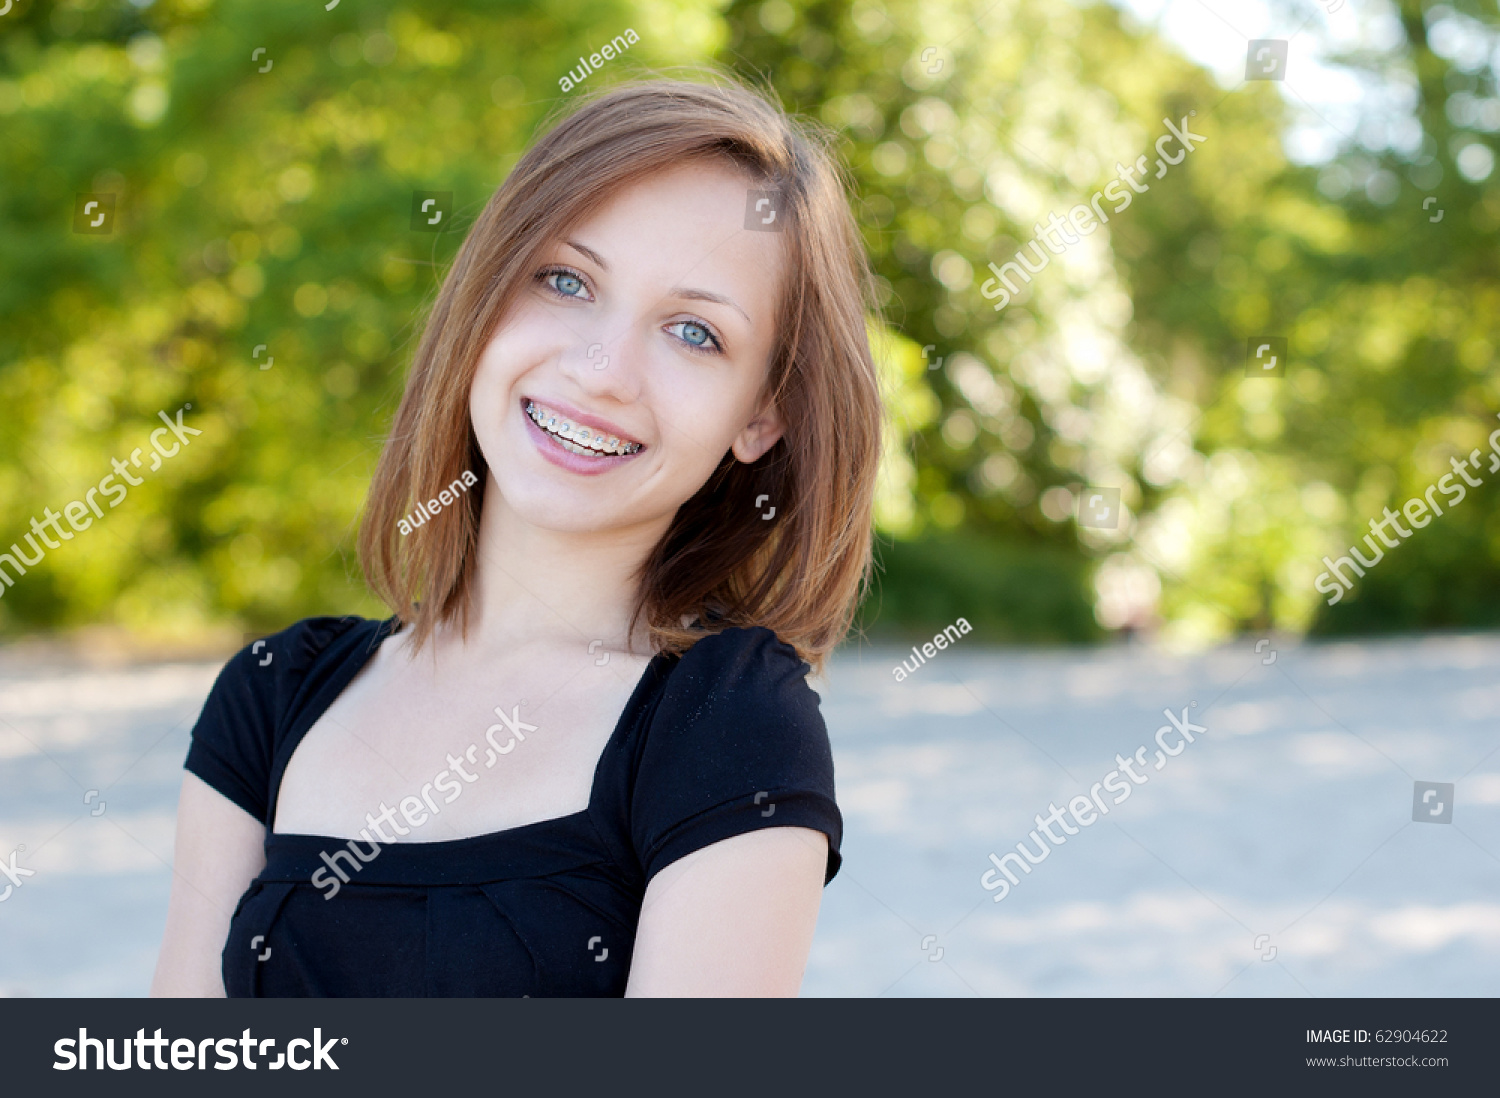 Beautiful Girl Wearing Braces, Candid Portrait Stock Photo 62904622 ...